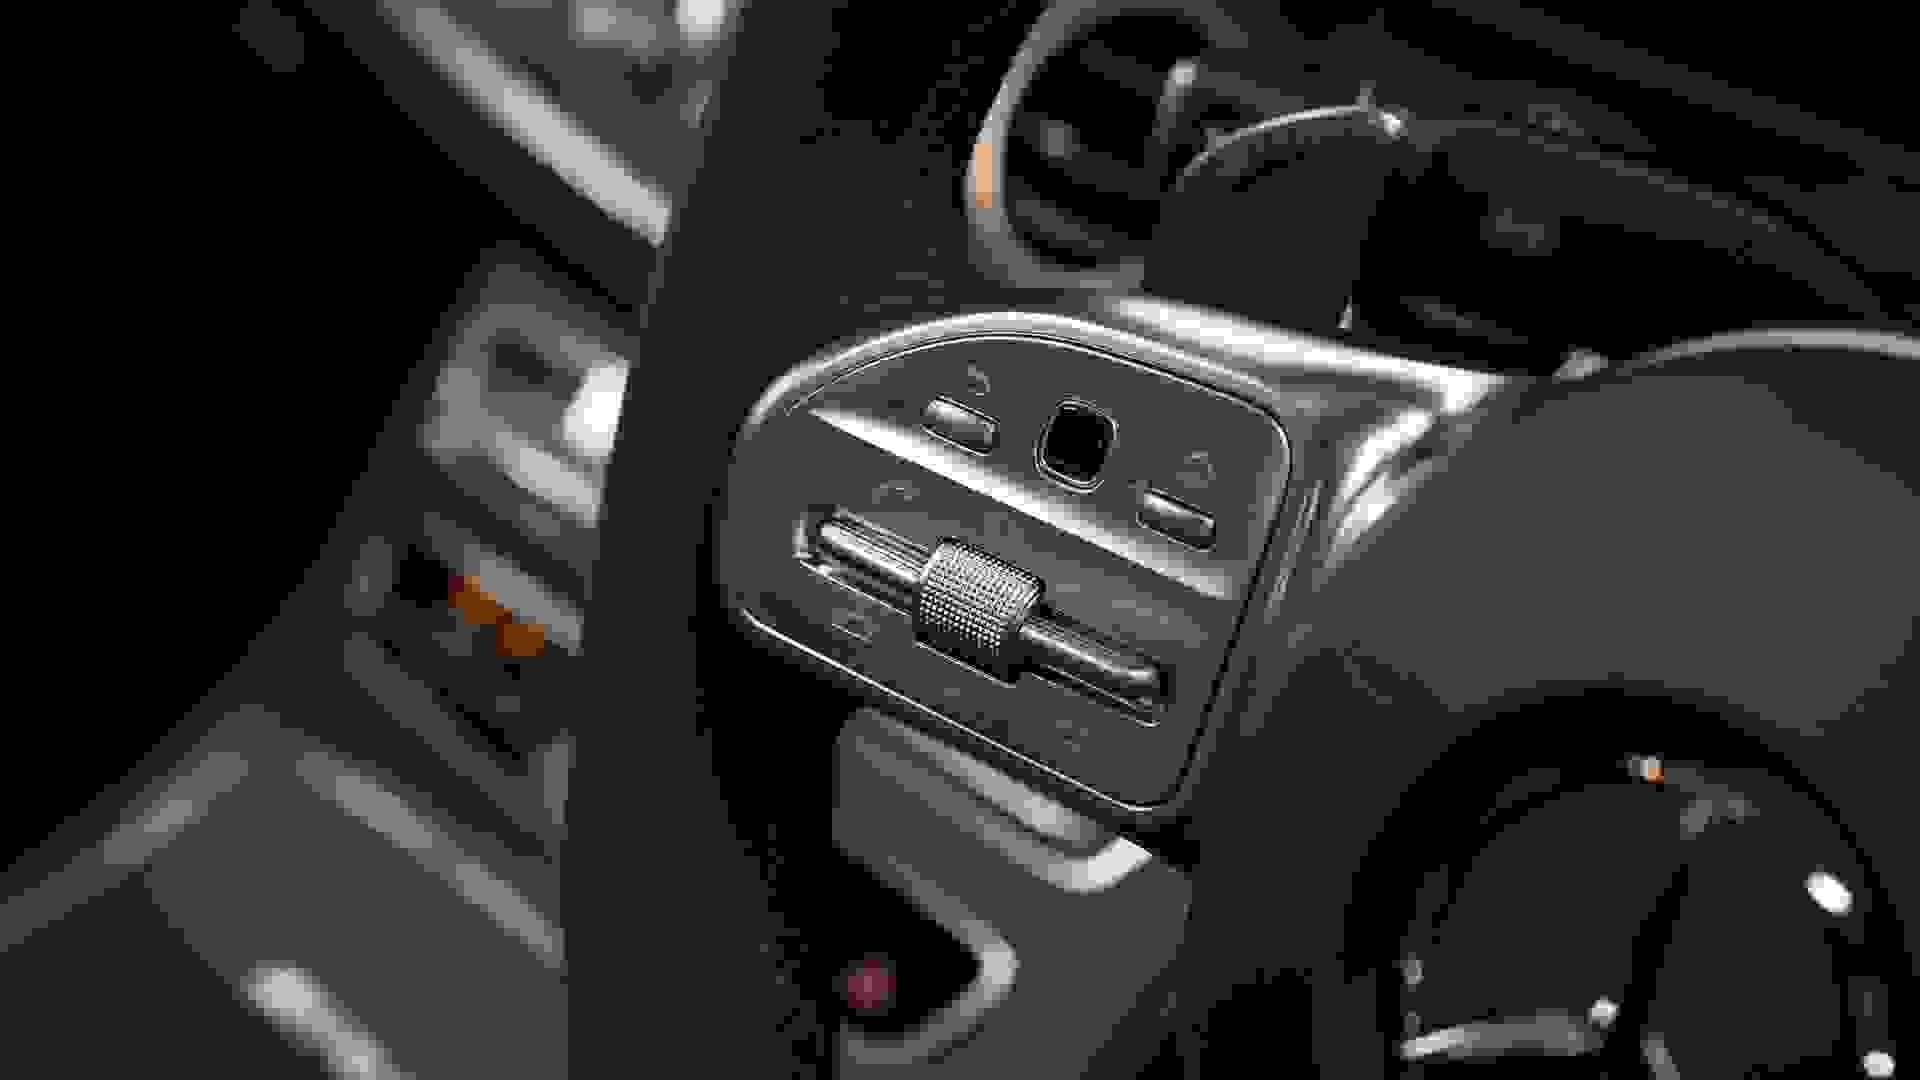 Mercedes-Benz E63 AMG Photo 70a67f1f-d660-4eb7-8211-69faeaf2e851.jpg